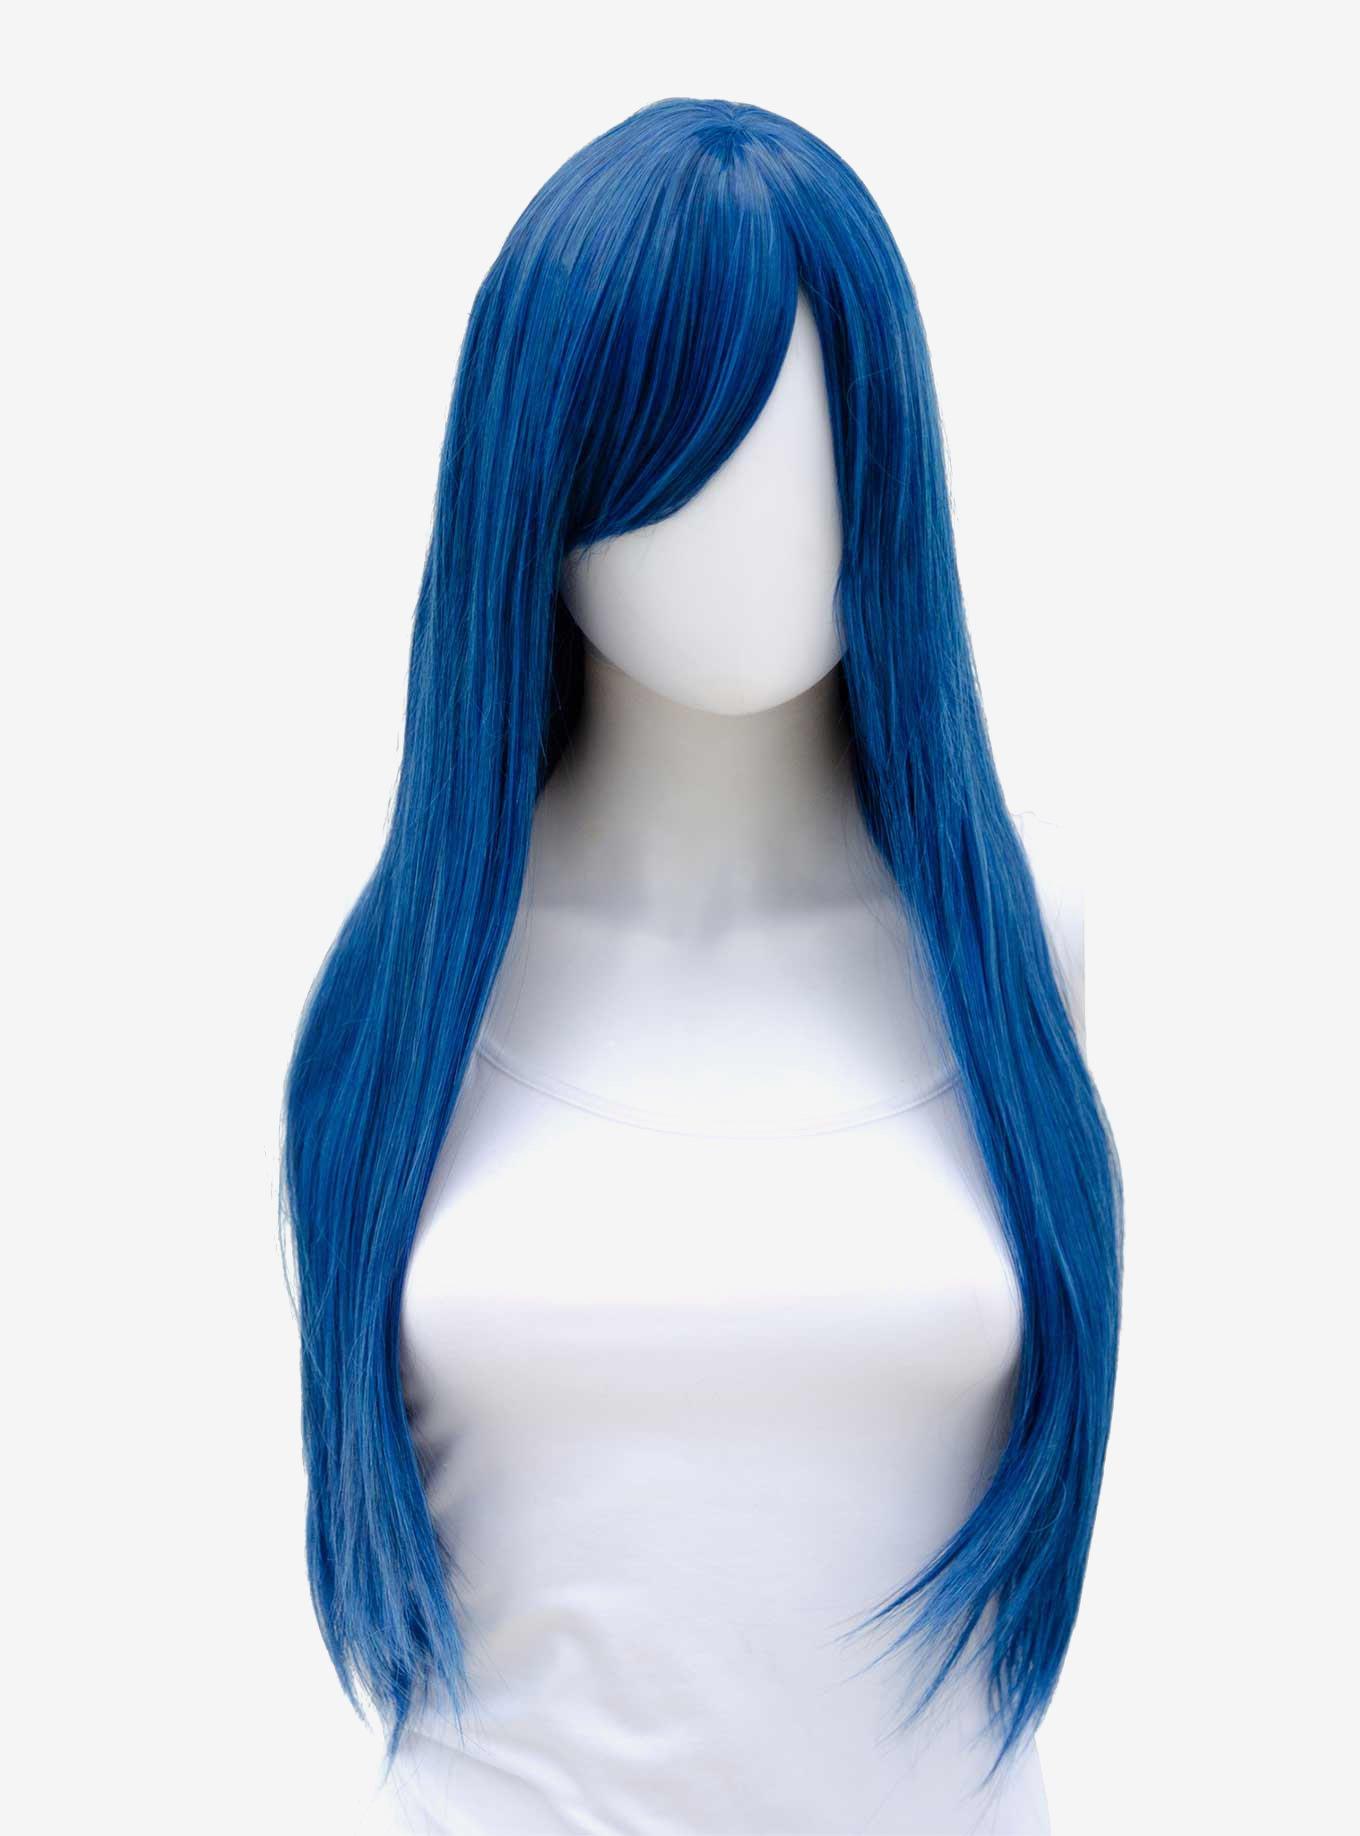 Epic Cosplay Nyx Shadow Blue Long Straight Wig, , hi-res